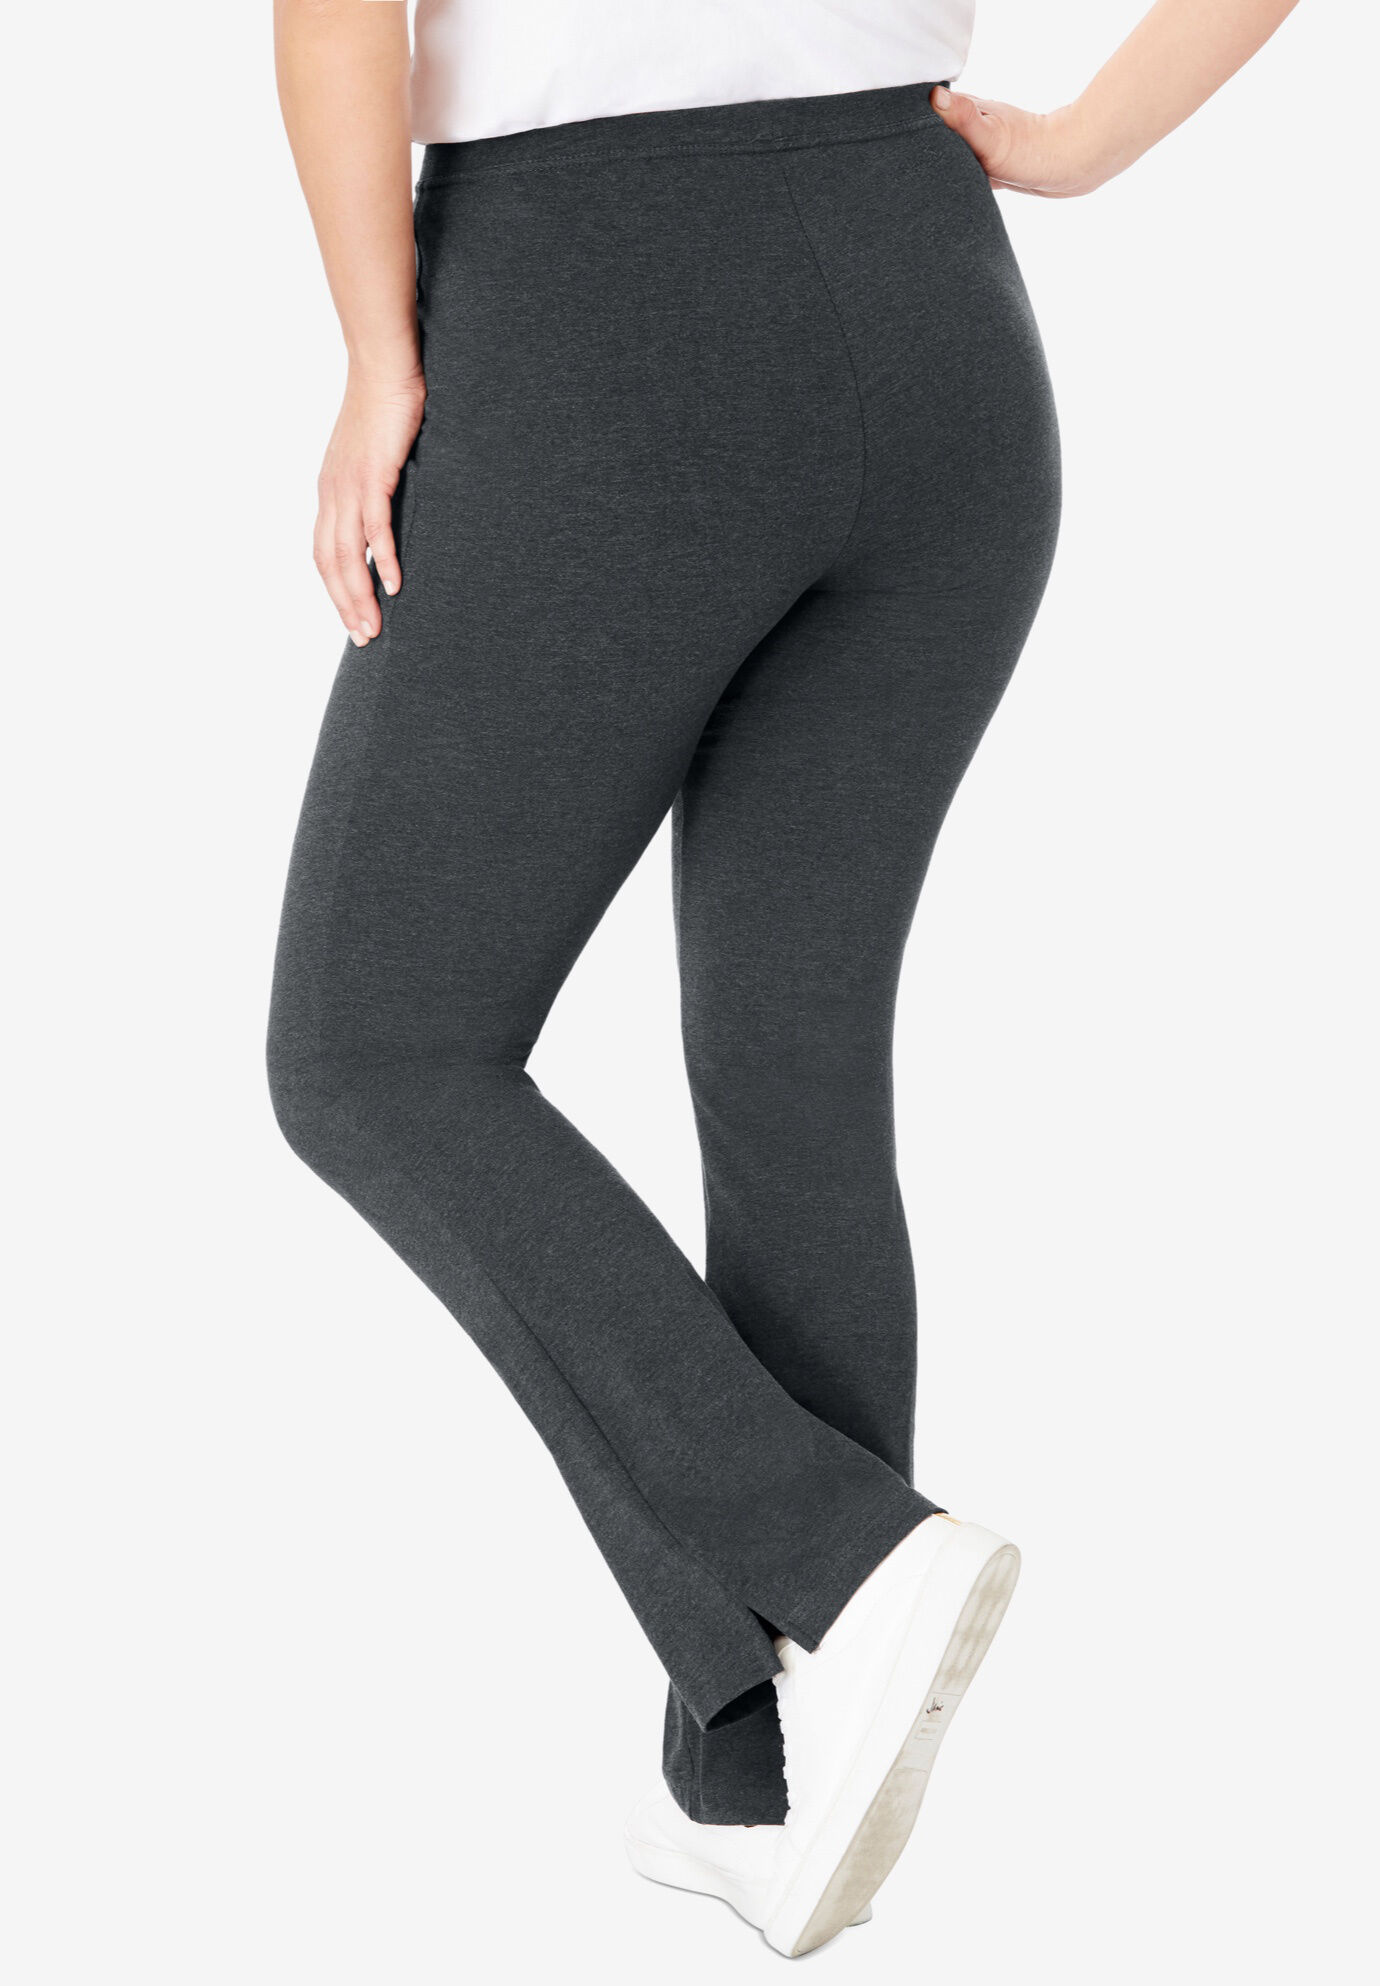 polyester spandex bootcut yoga pants